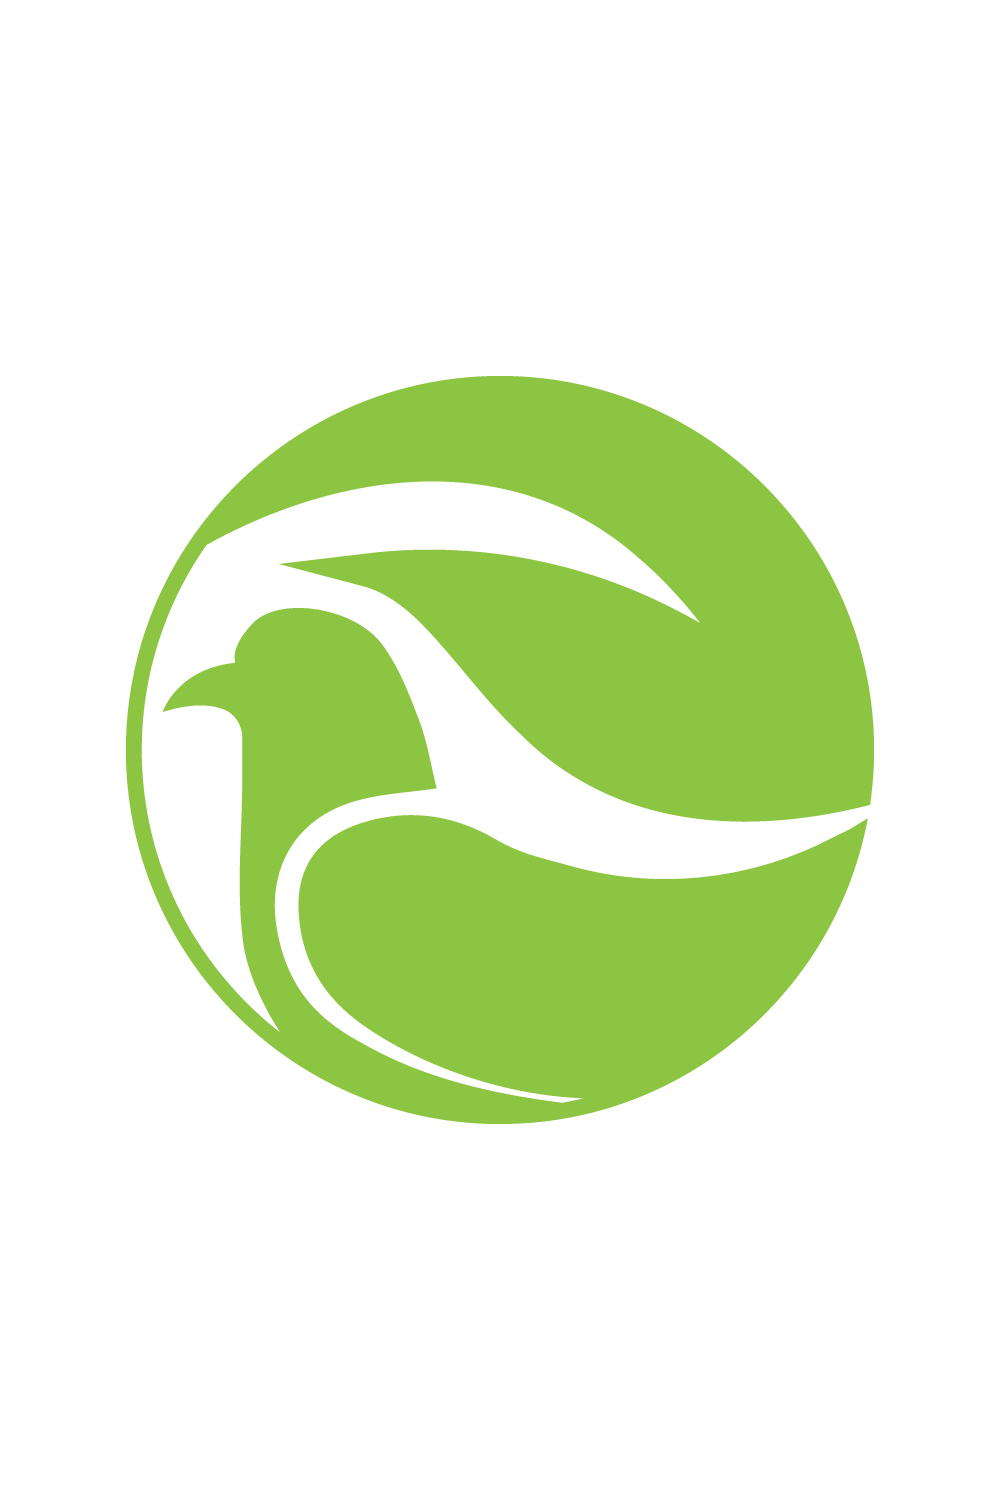 Luxury Bird Nest logo design vector images Green Bird logo design template icon design pinterest preview image.